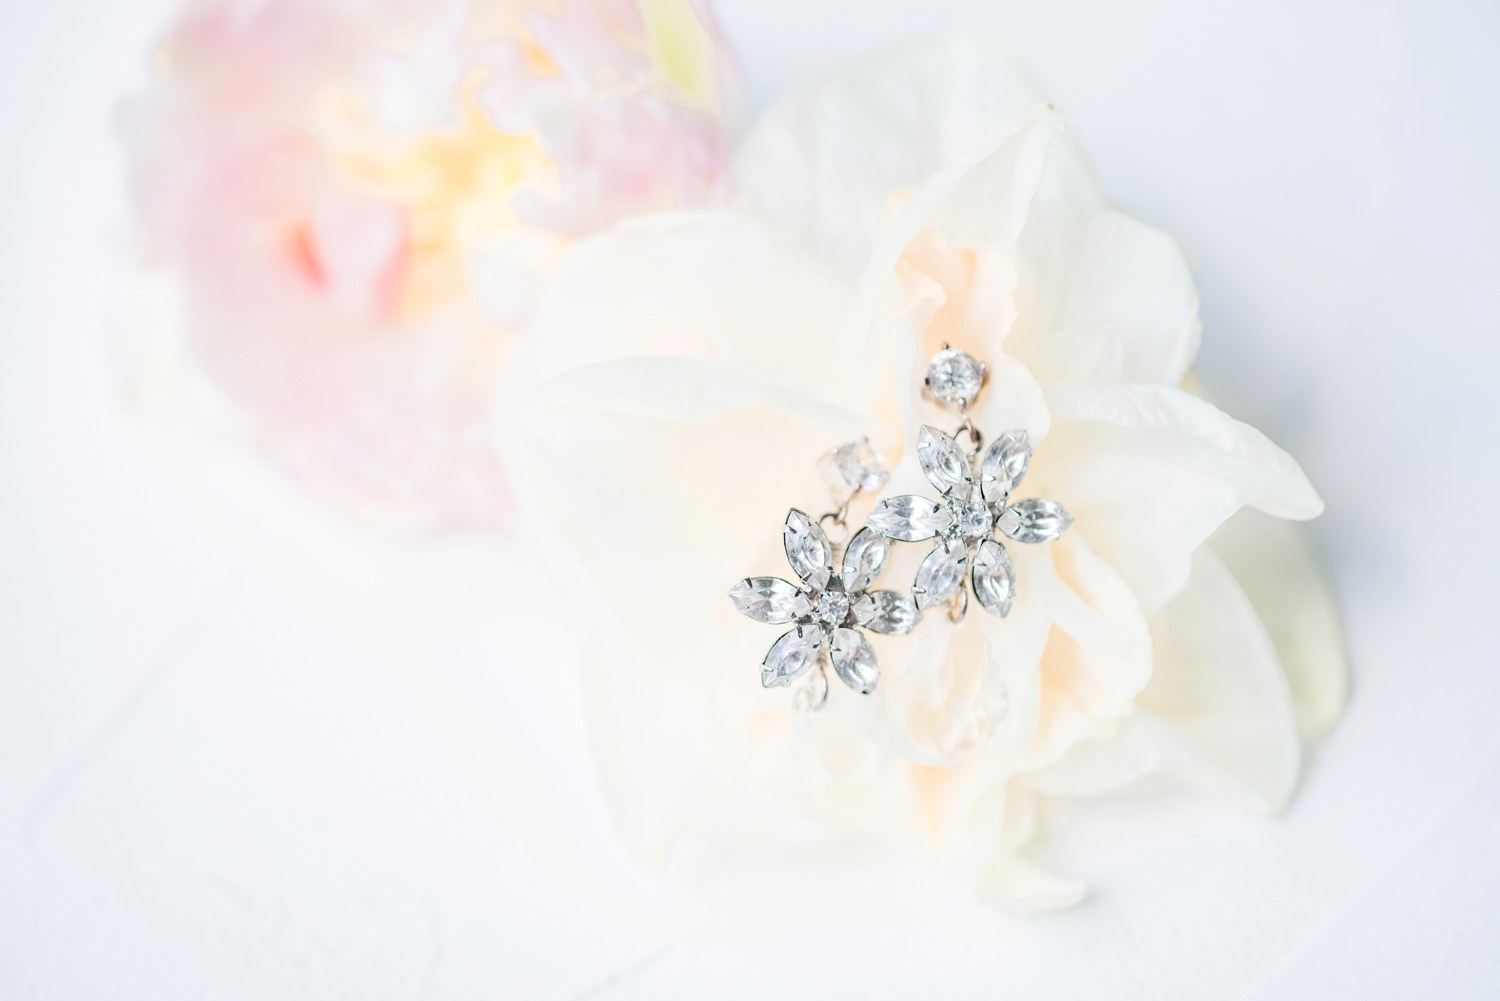 earrings-details-shot-on-a-flower